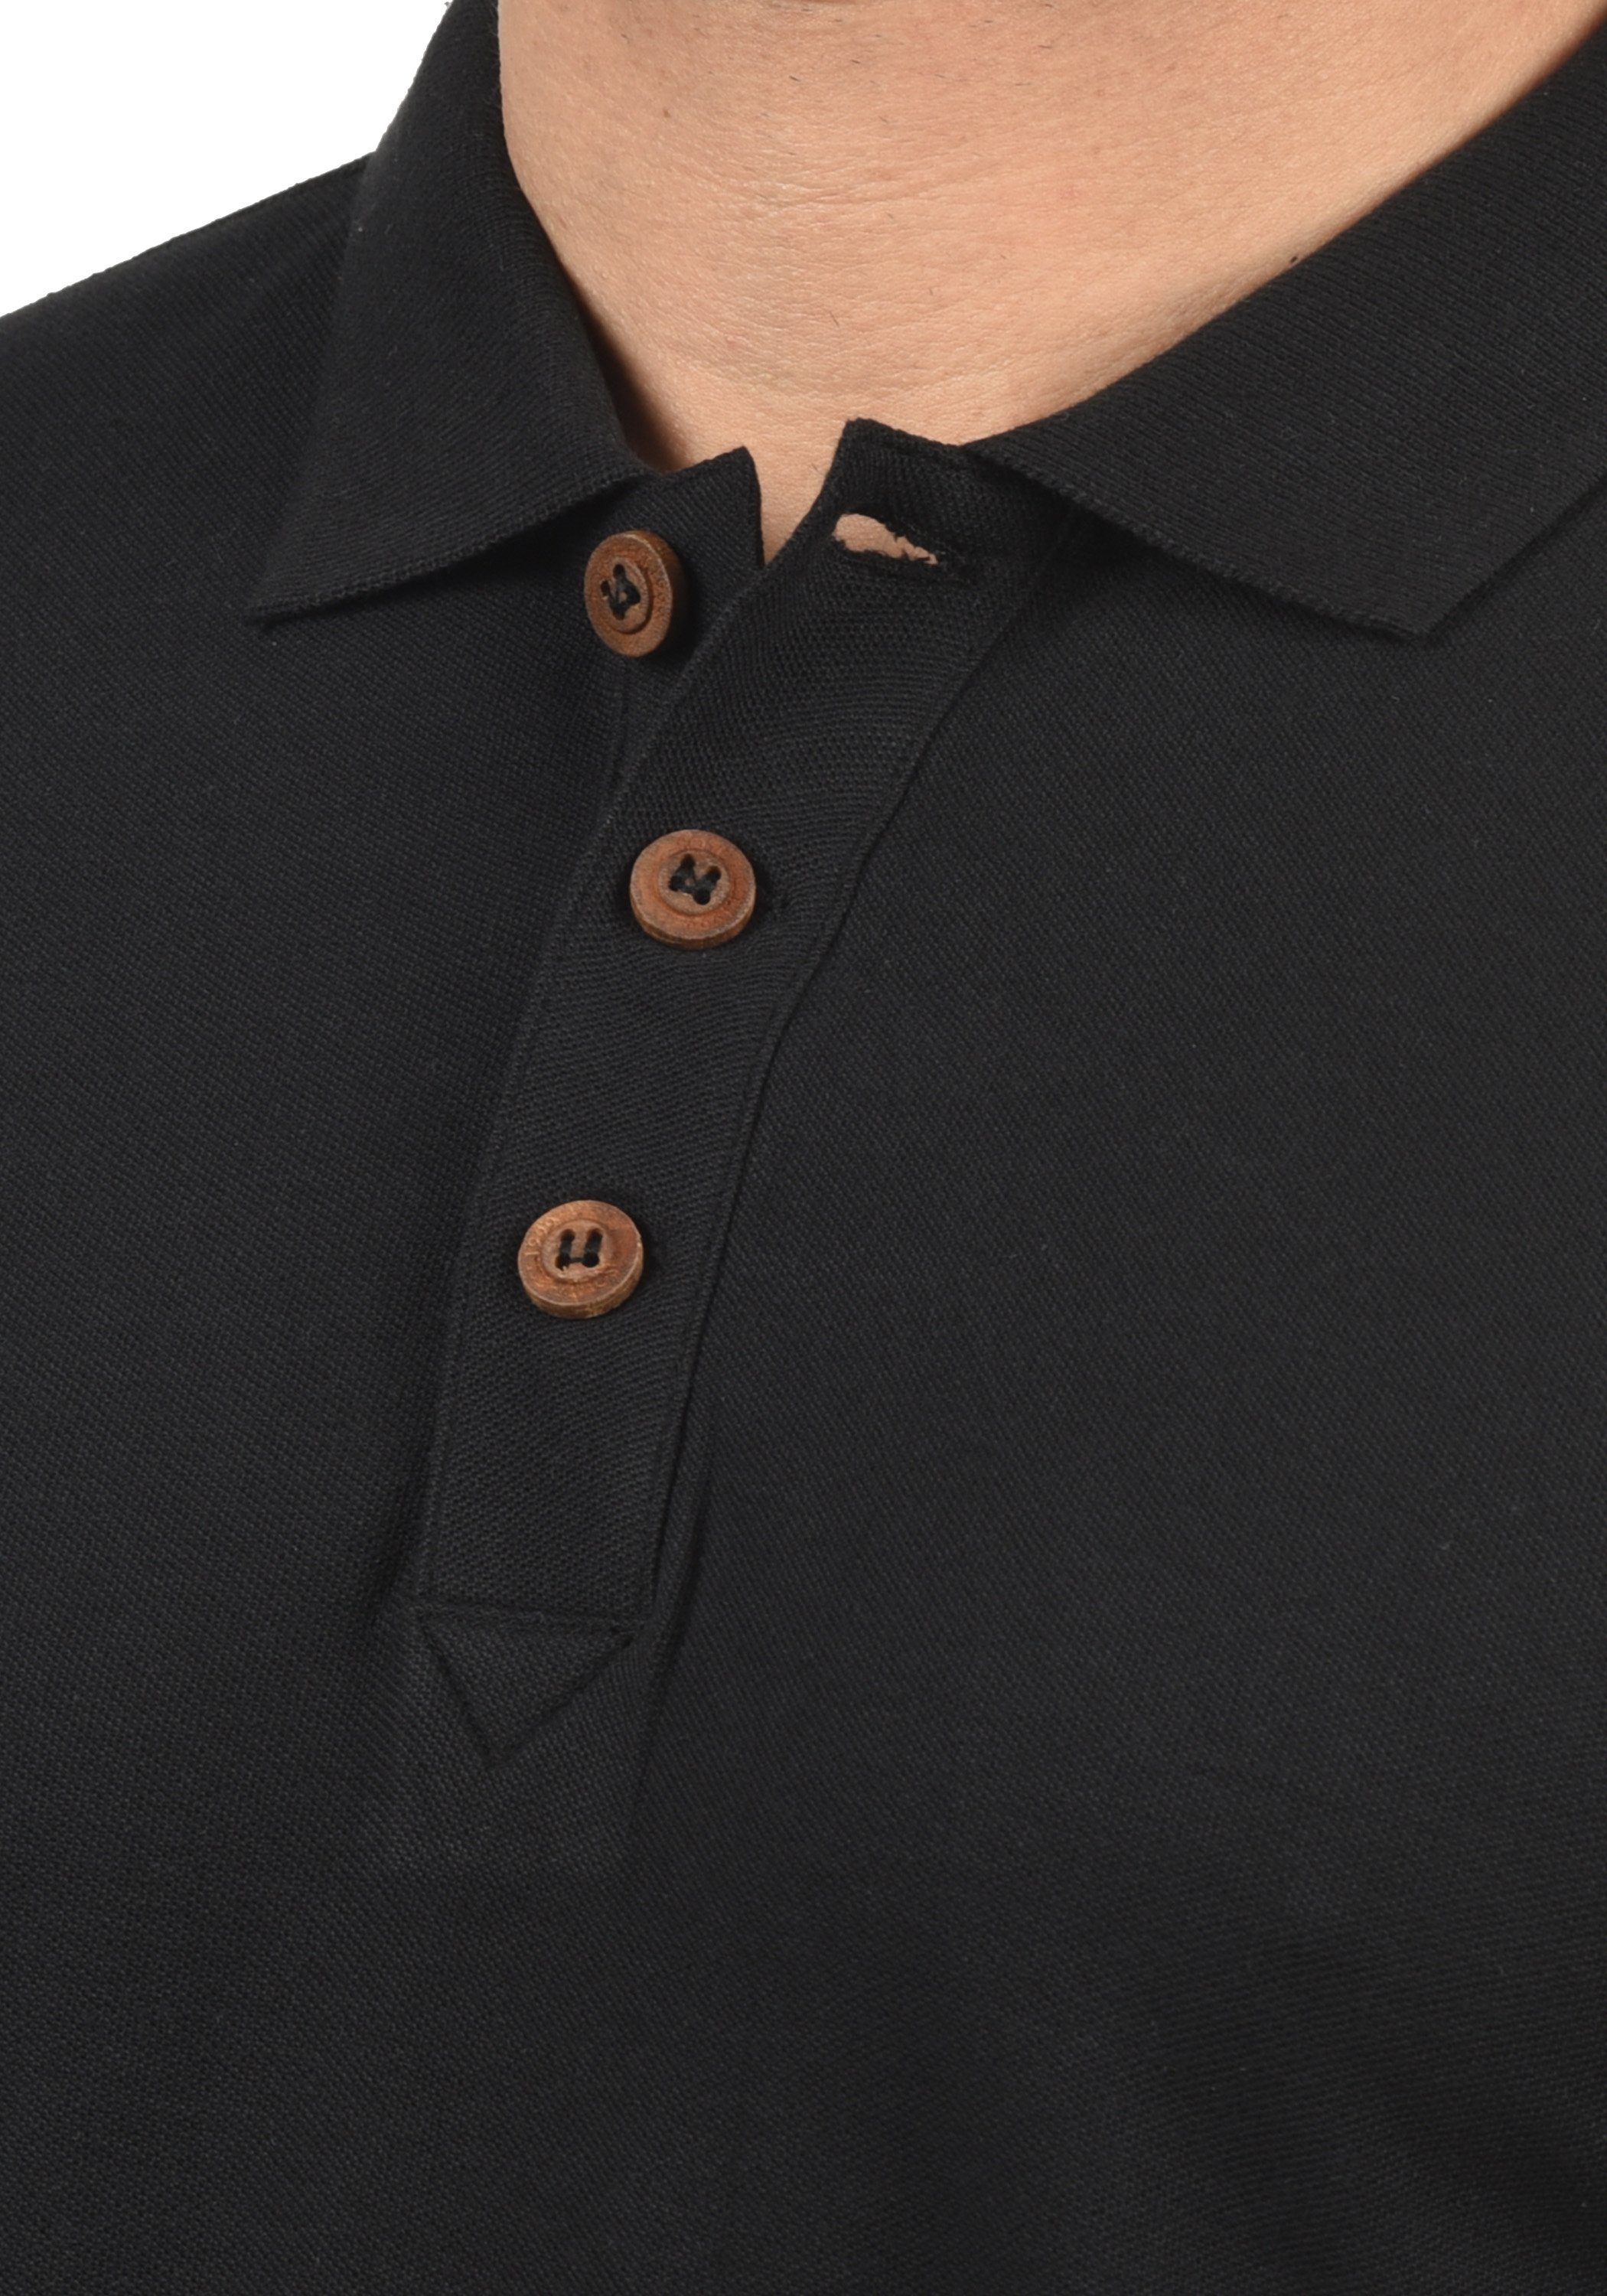 !Solid Poloshirt Black mit Rückenpartie verlängerter (9000) Polo SDTripPolo